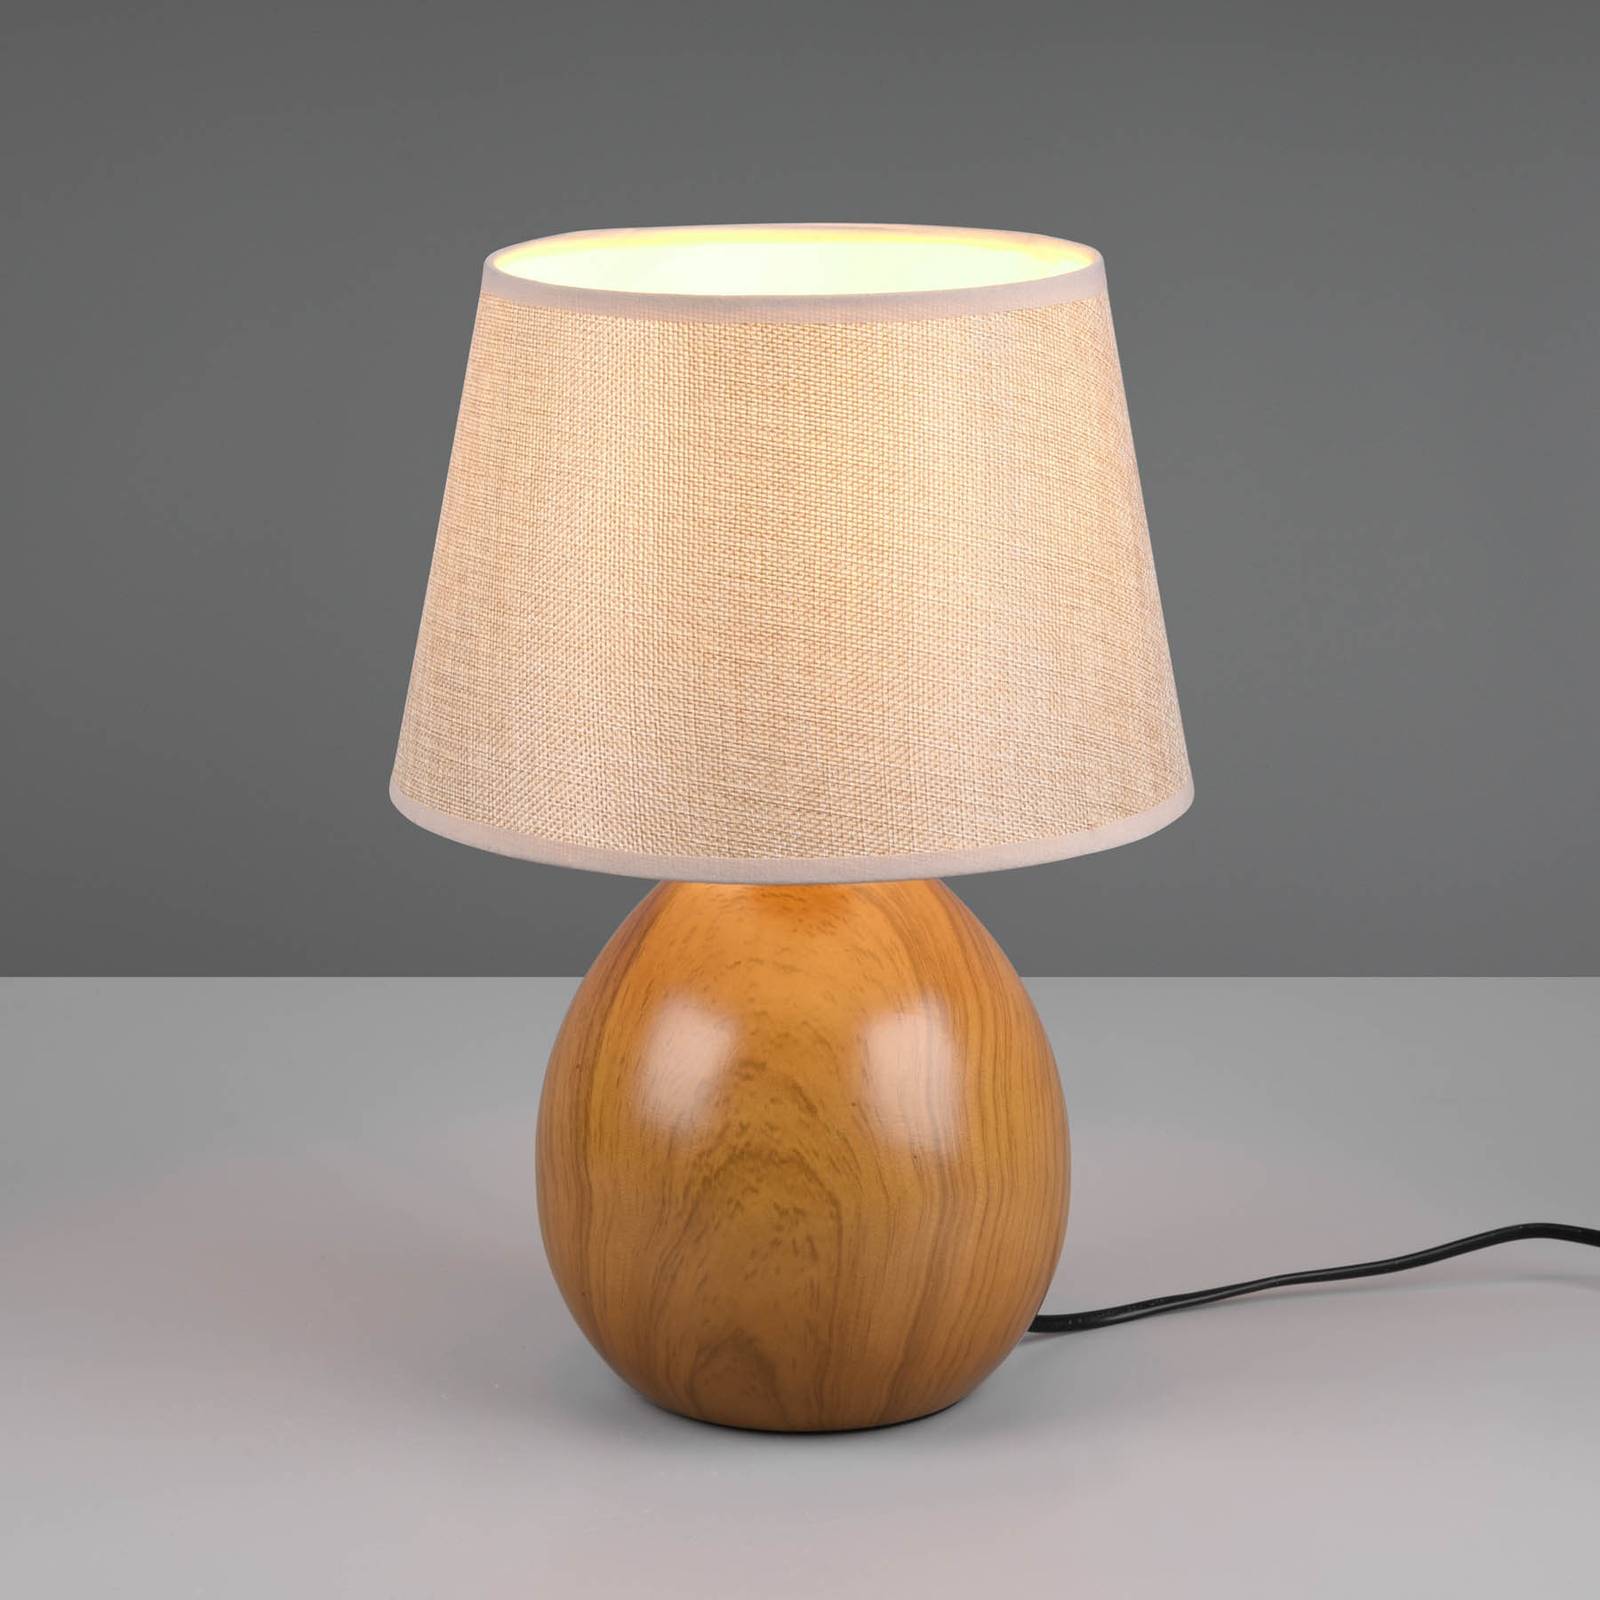 Reality Leuchten Loxur table lamp, height 35 cm, beige/wood look